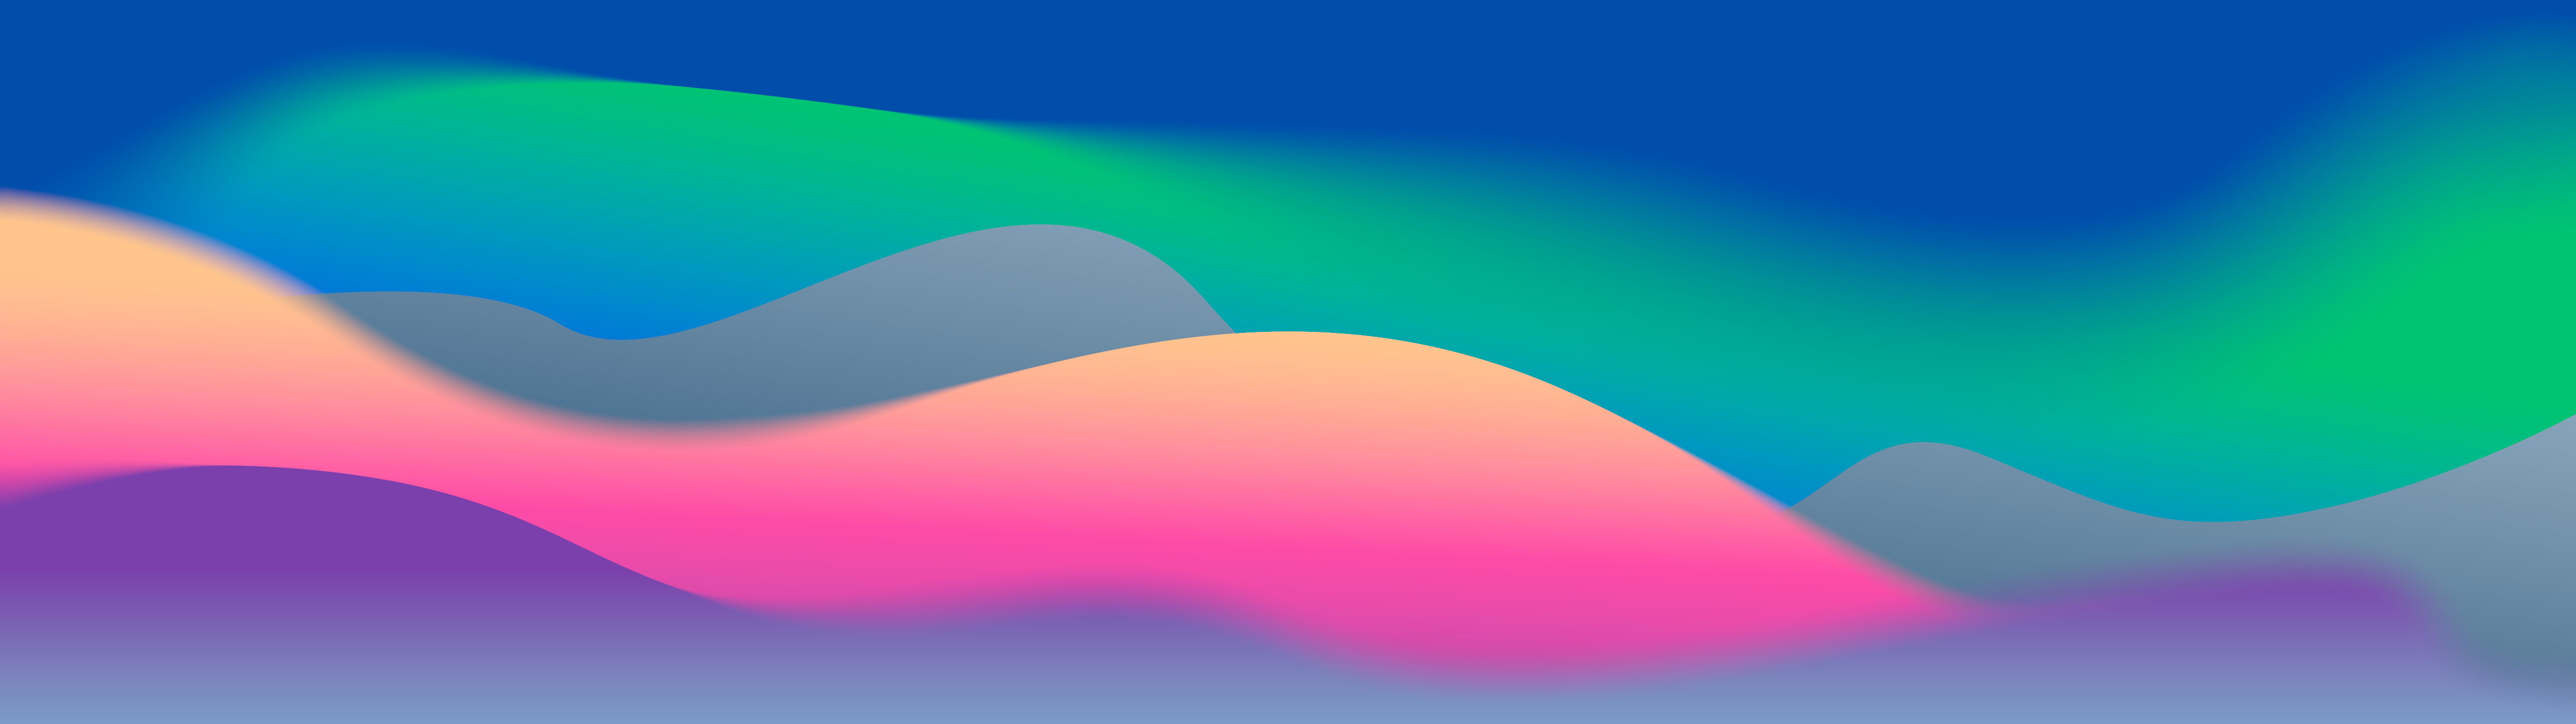 Blurred MacOS Big Sur Waves Colorful Dual Display Dual Monitors Ultrawide 5120x1440